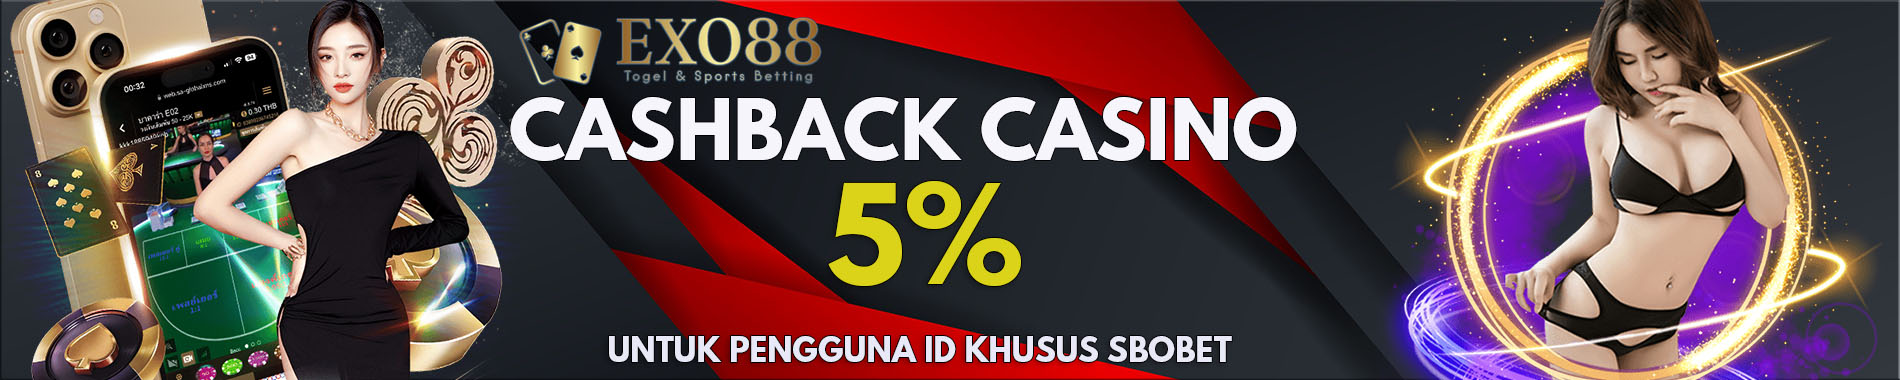 CASHBACK CASINO 5% KHUSUS SBOBET